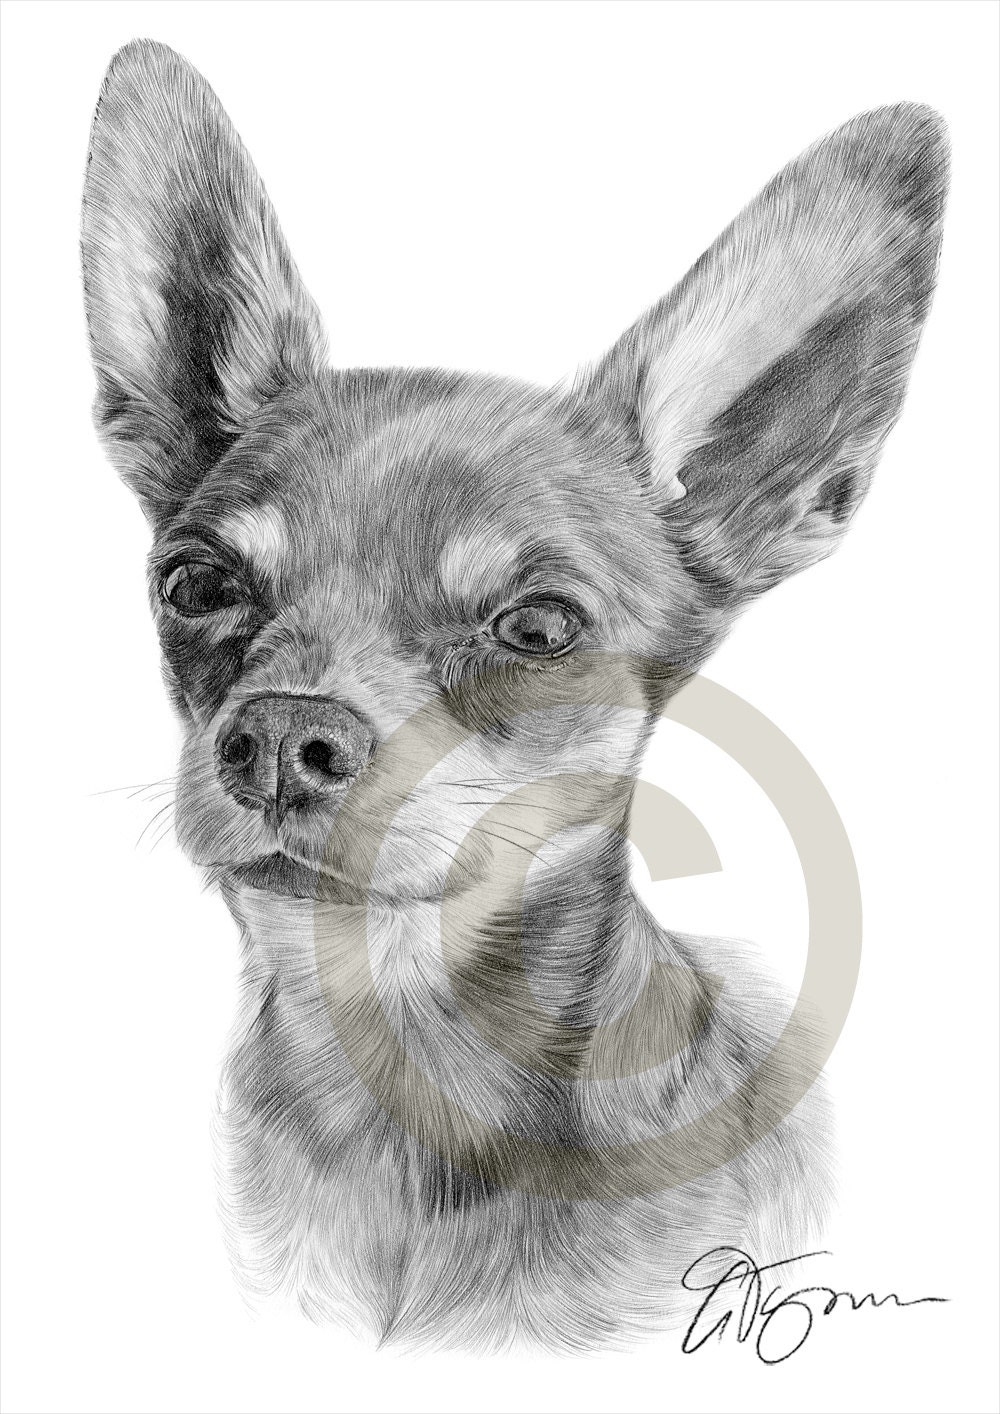 Dog Chihuahua Chiwawa pencil drawing print A4 size artwork